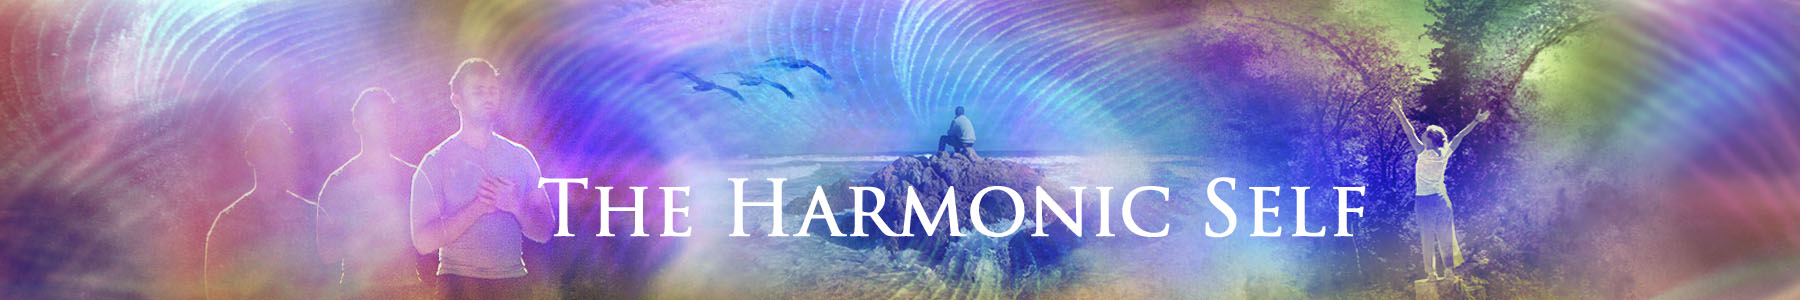 Harmonic Self banner2